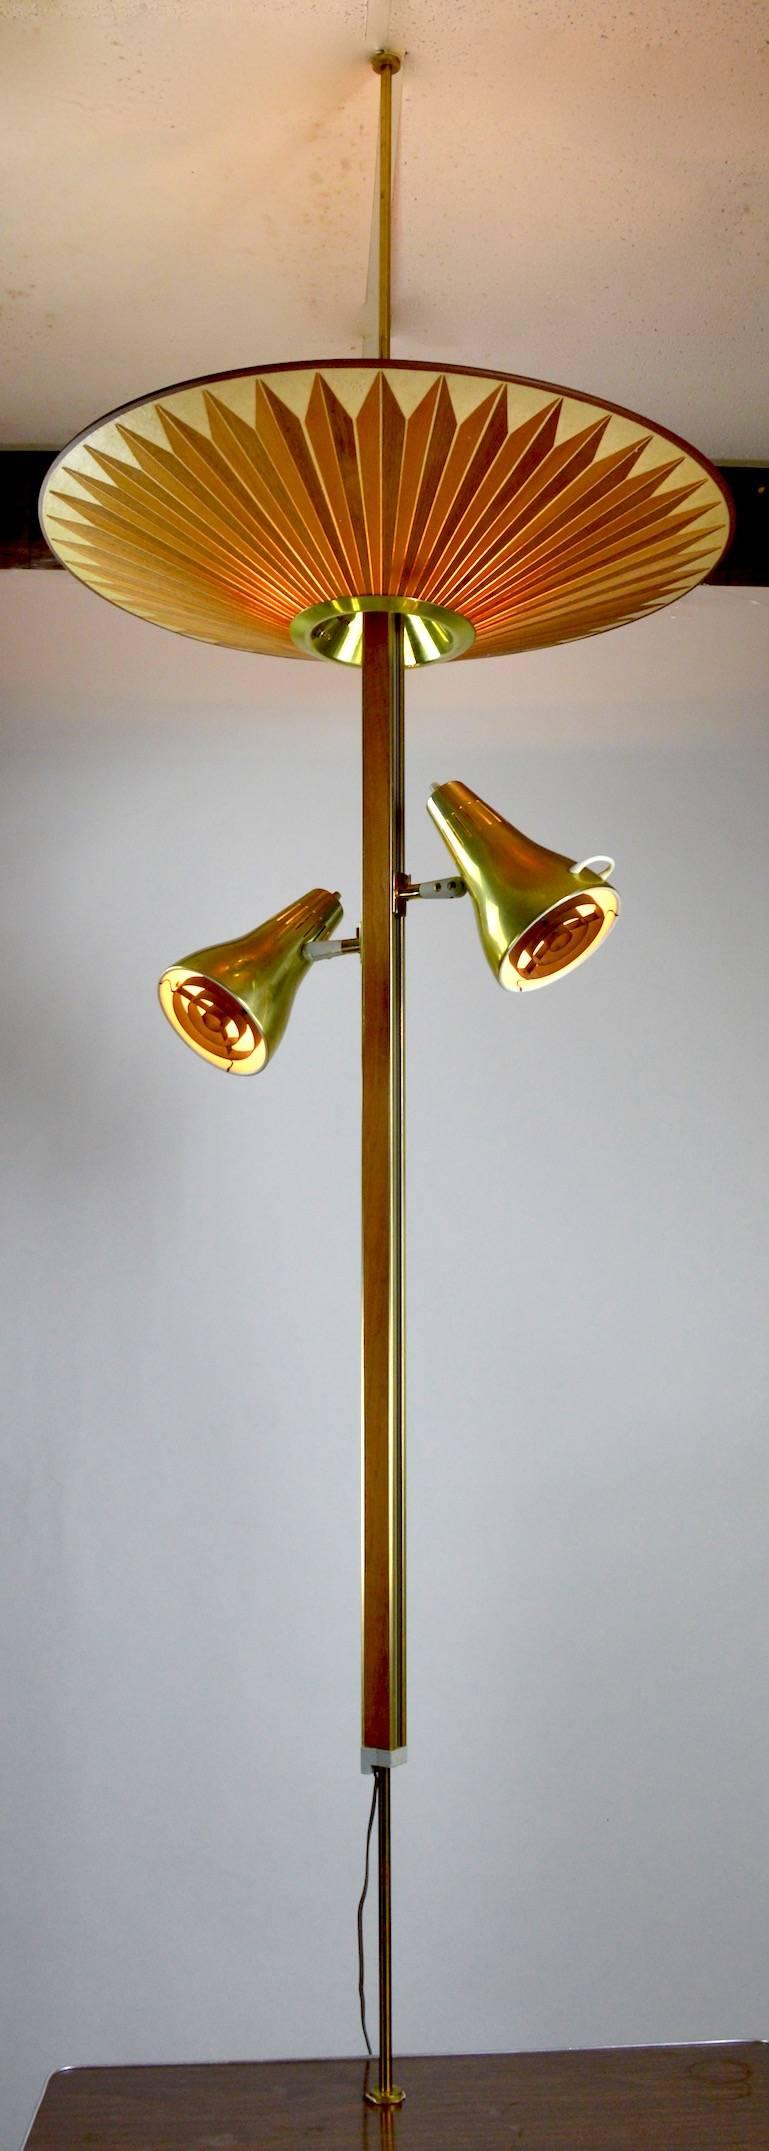 Mid-Century Modern Tension Pole Floor Lamp by Thurston for Lightolier